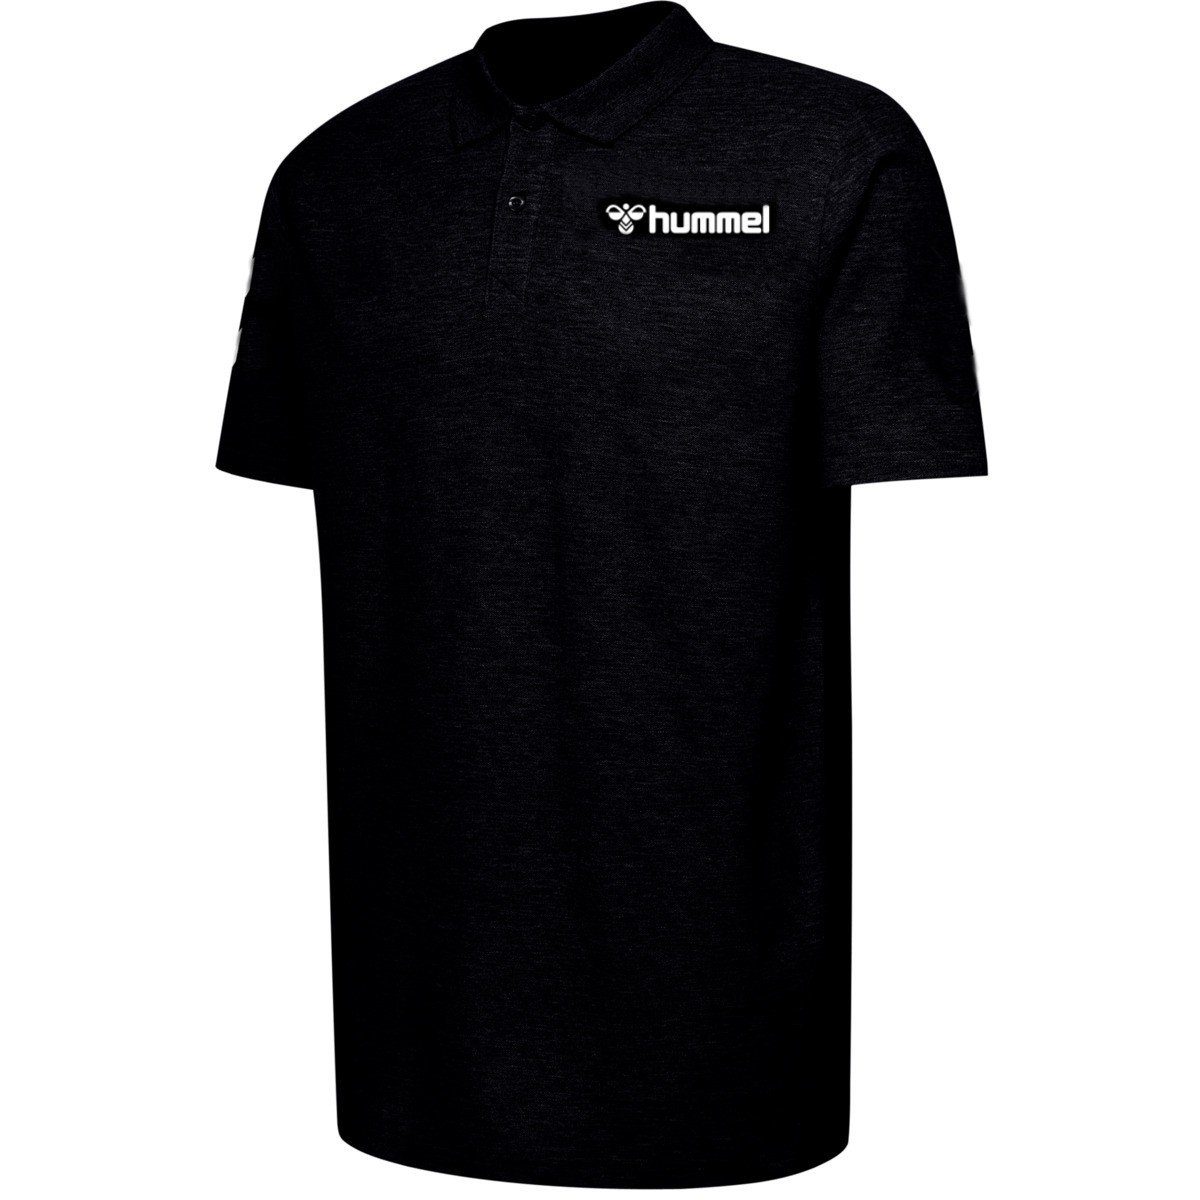 HMLGOMover T-Shirt Poloshirts hummel 2001 - BLACK Kinder POLO COTTON